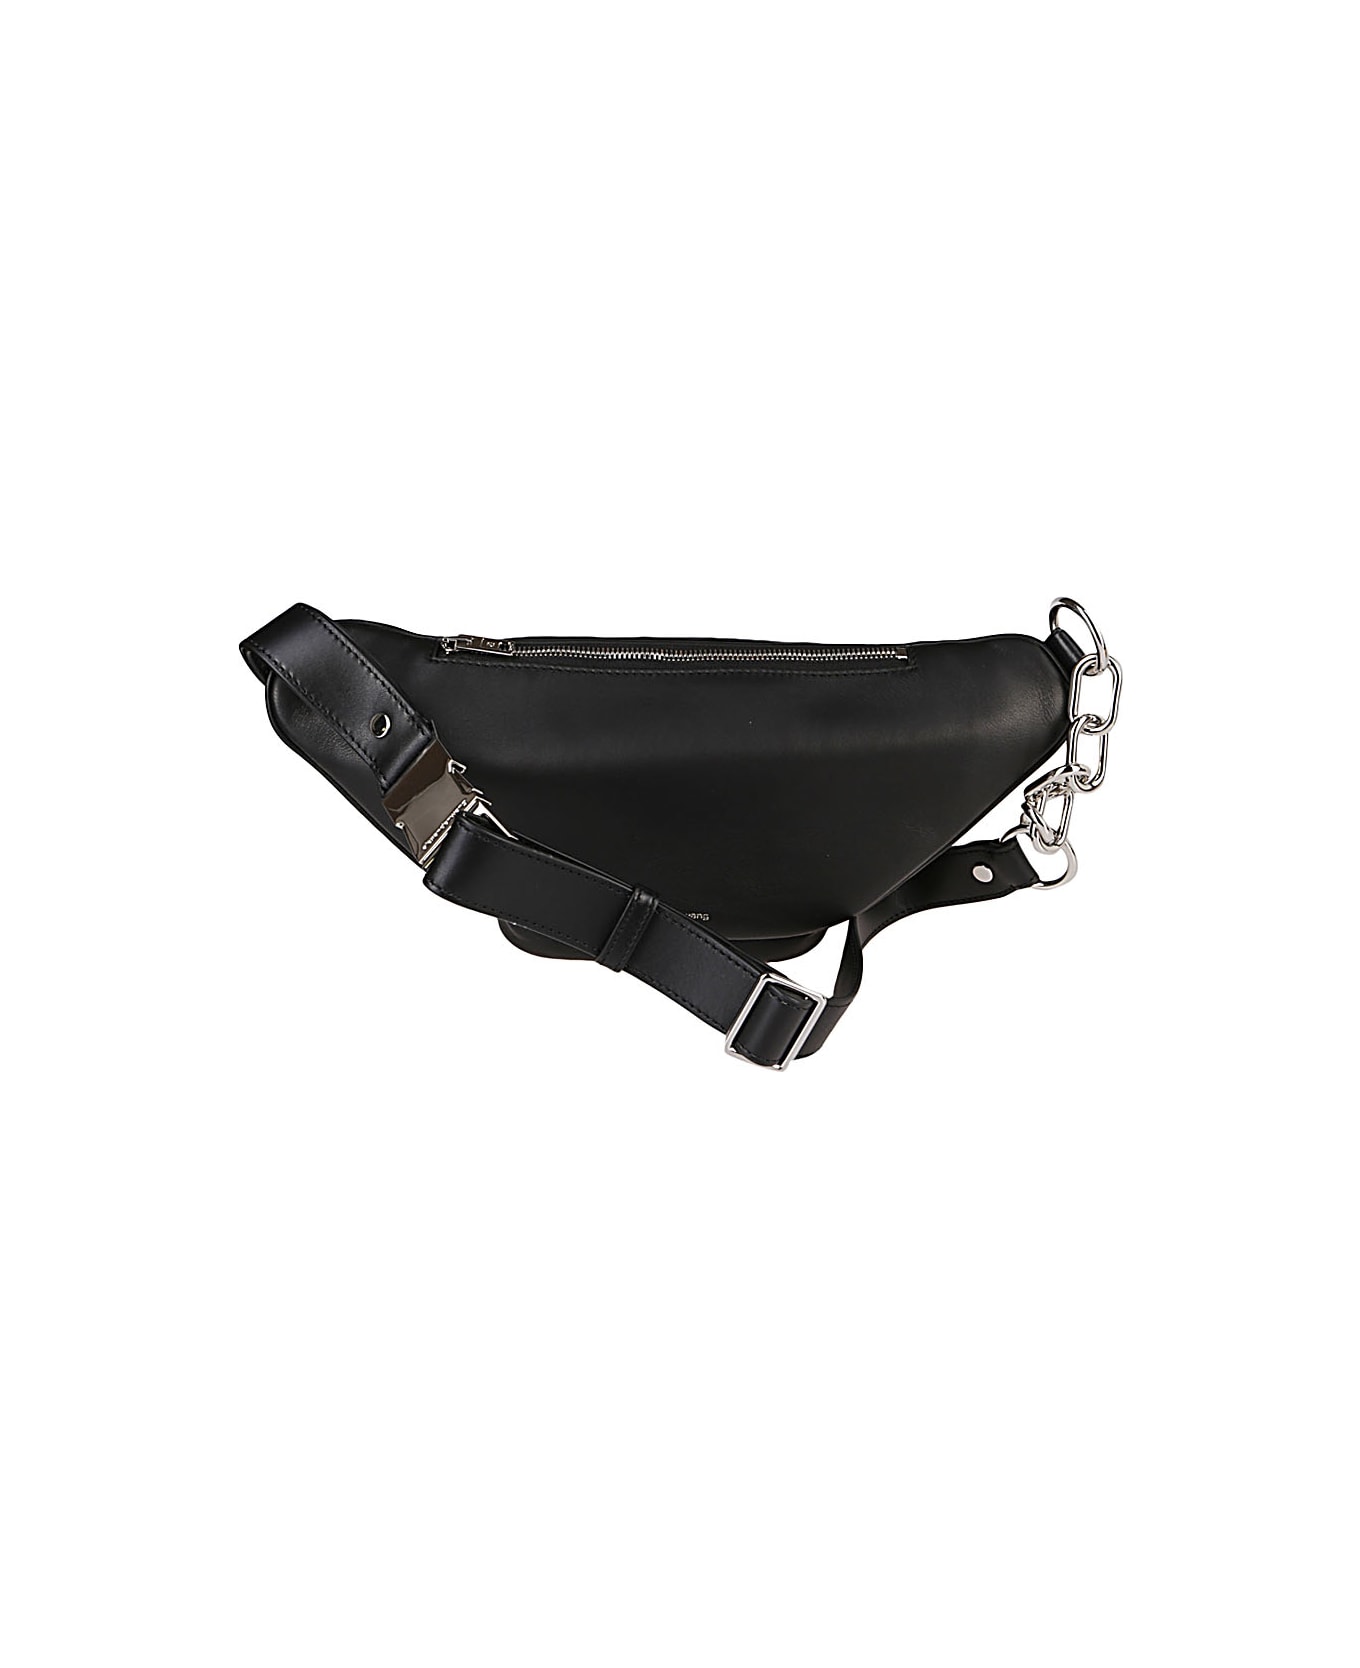 Alexander Wang Black Leather Attica Belt Bag - Black ベルトバッグ